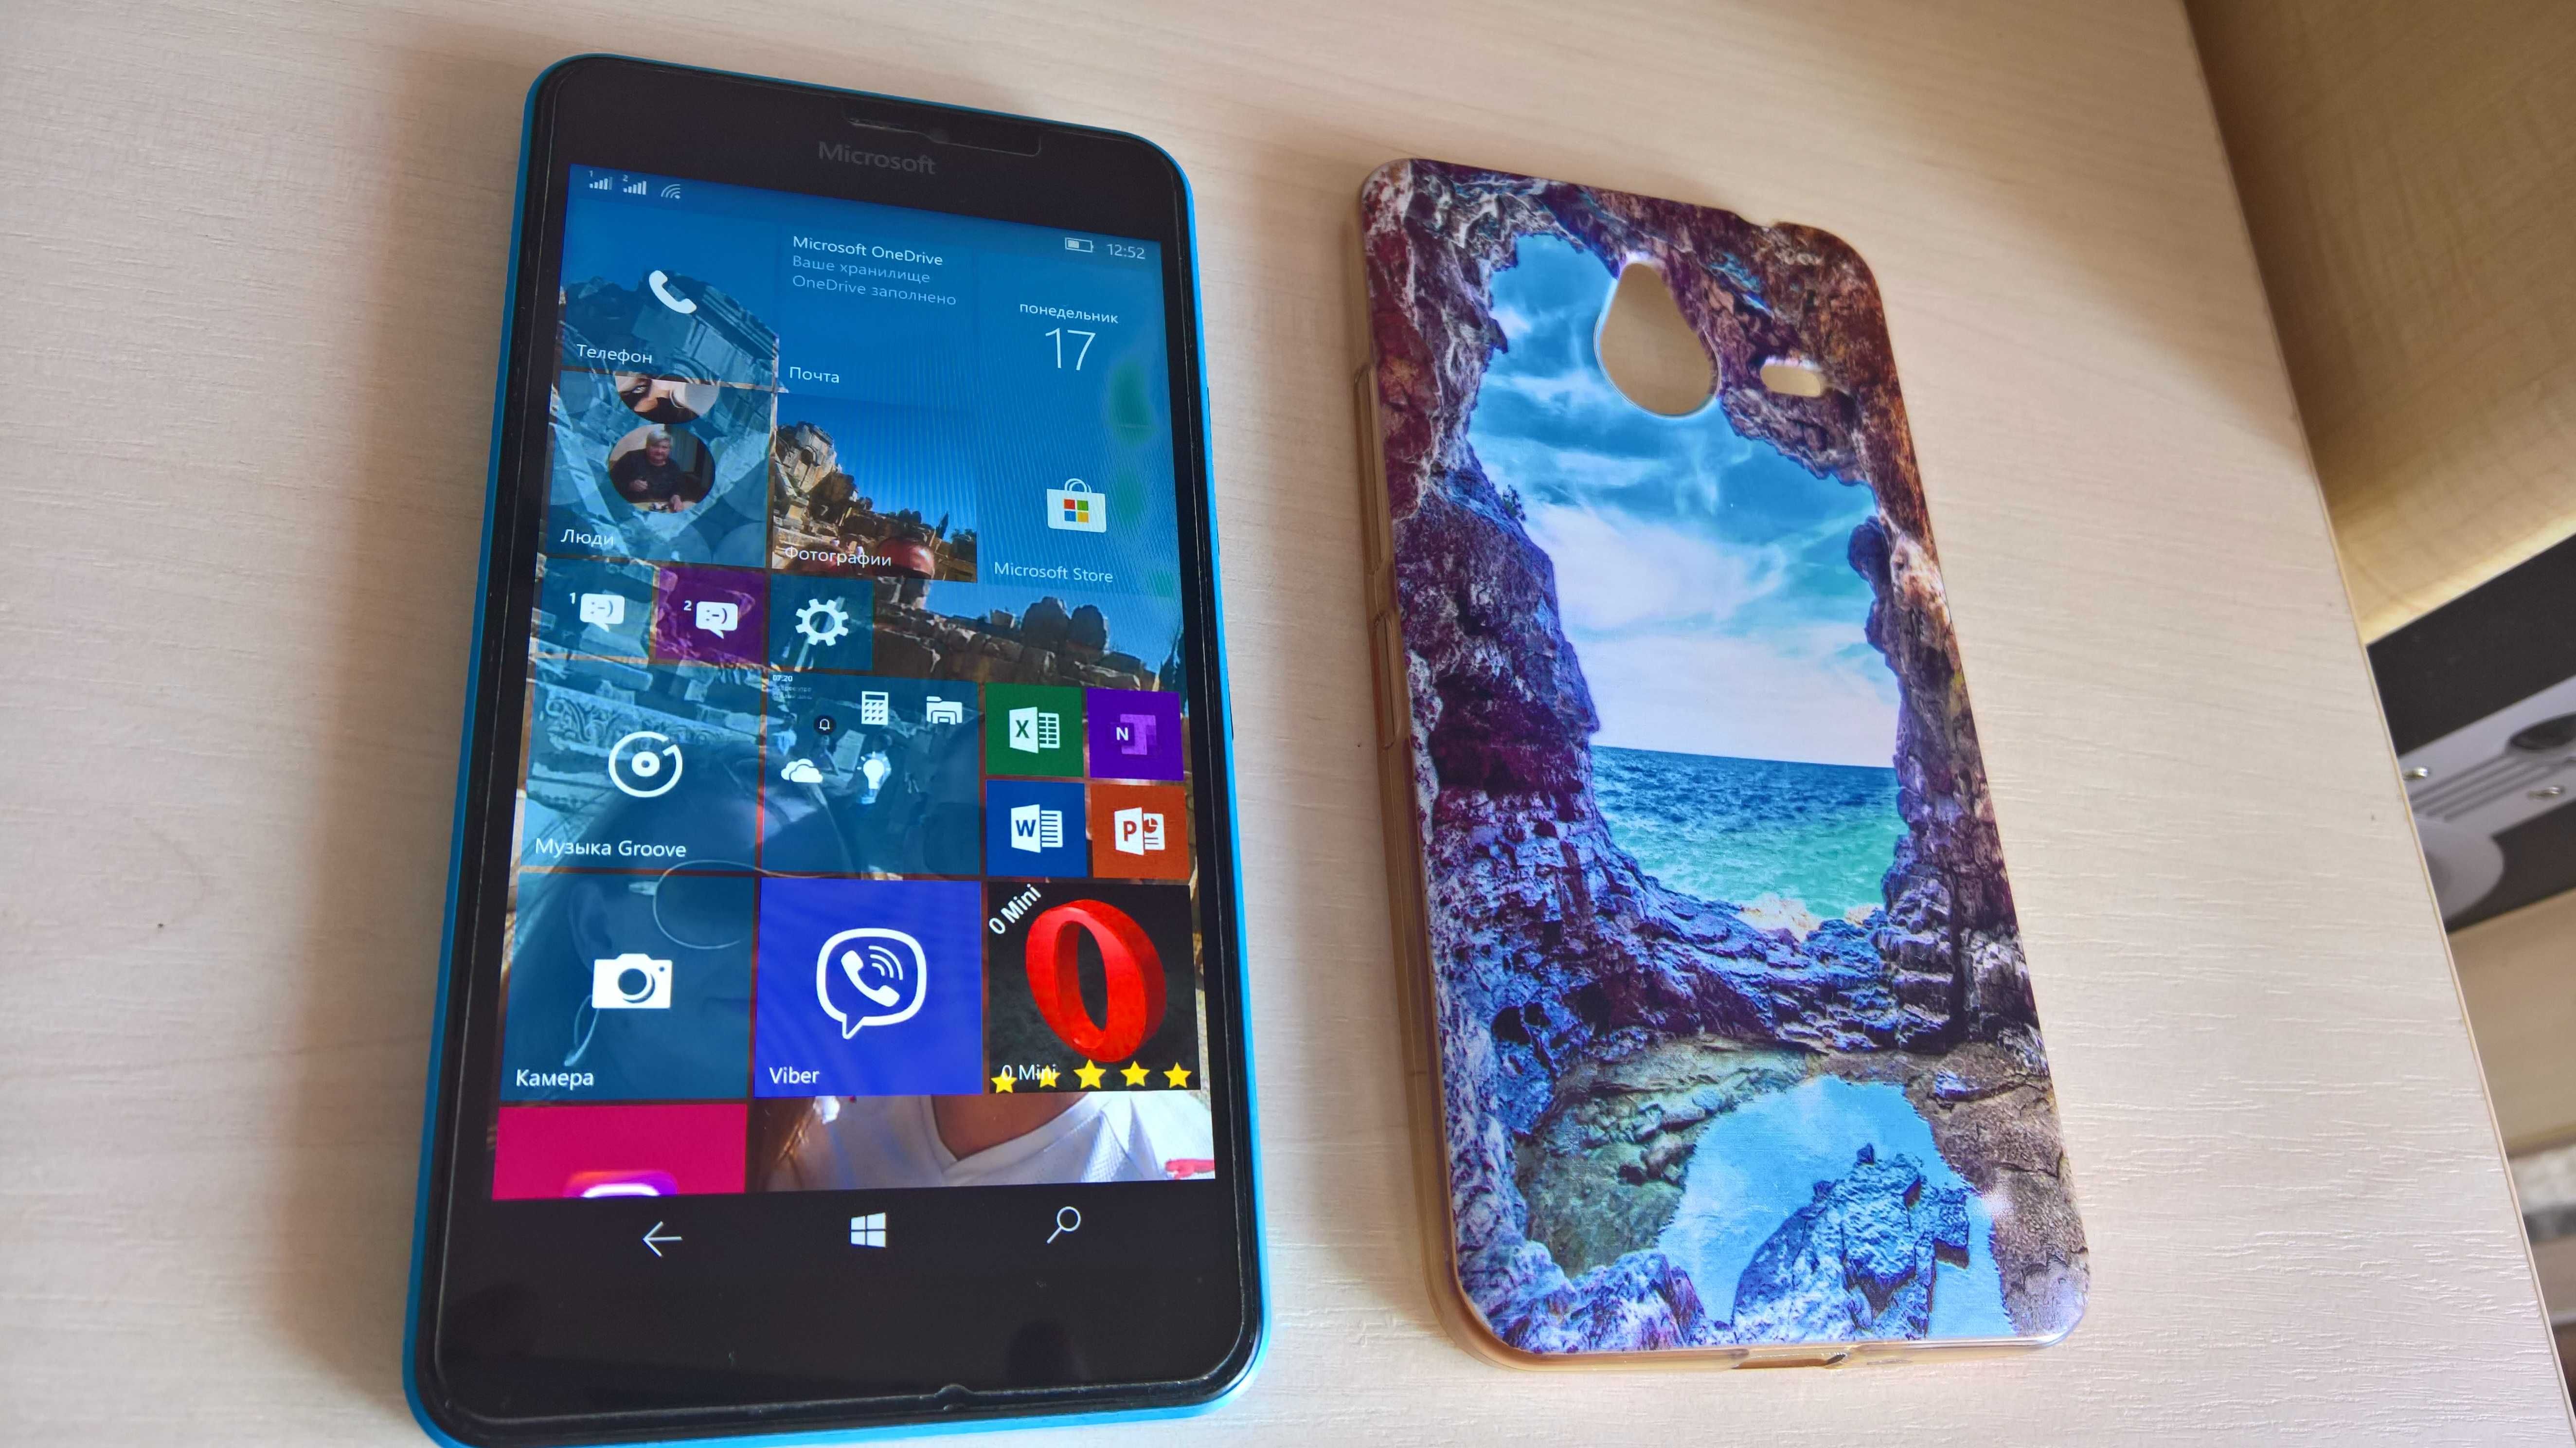 Microsoft Lumia 640 XL (Nokia) DS Cyan